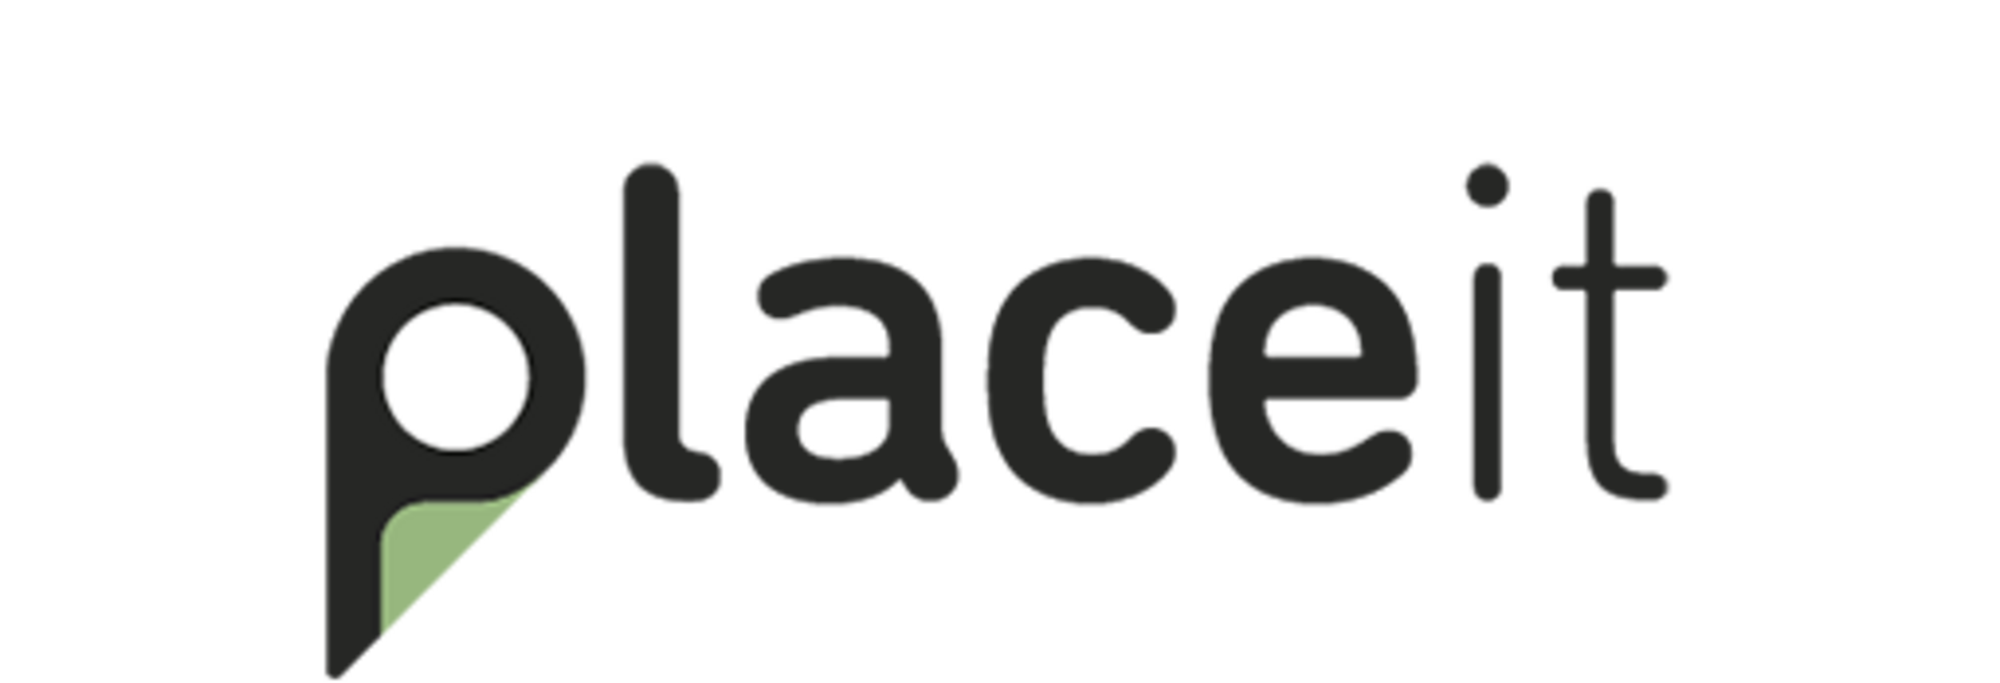 logo_placeit